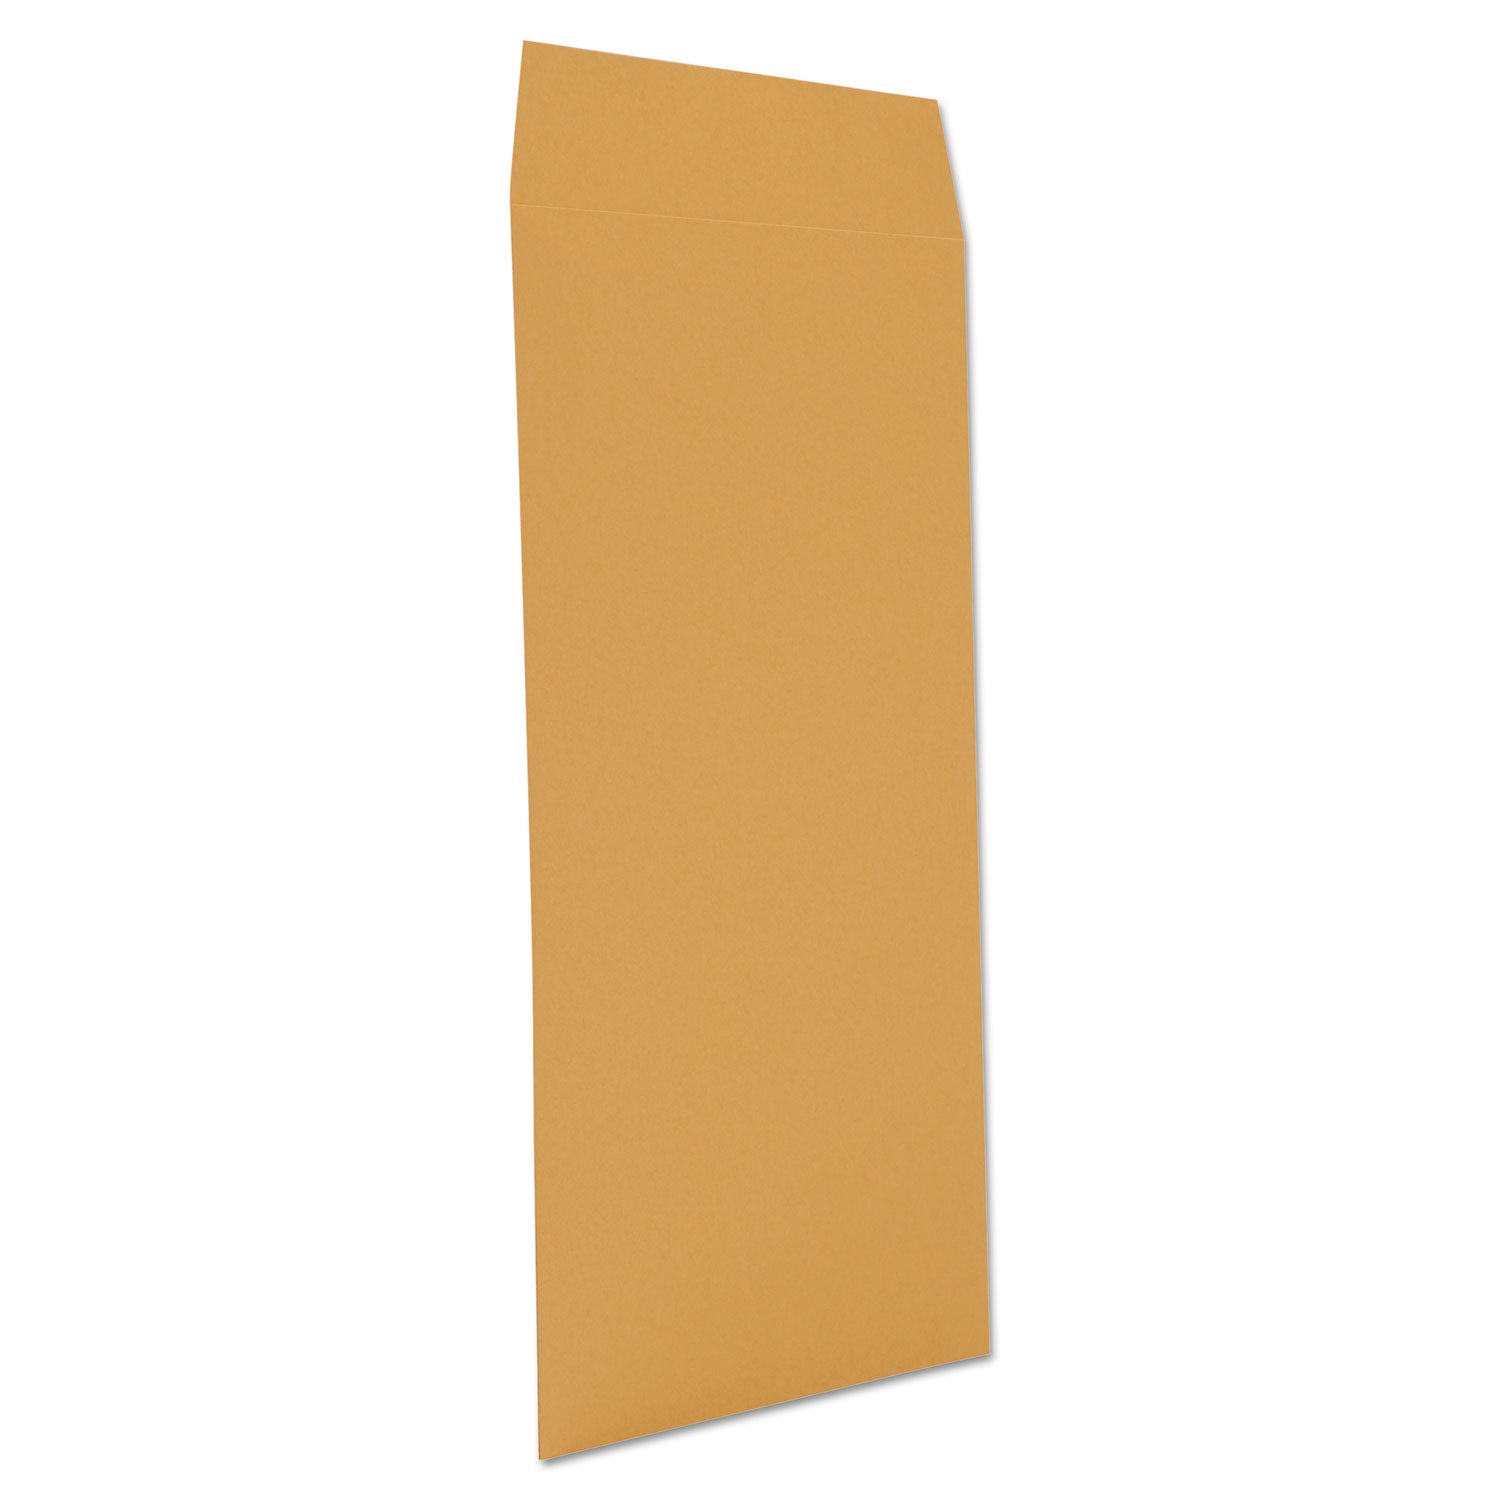 Catalog Envelope, 24 lb Bond Weight Paper, #10 1/2, Square Flap, Gummed Closure, 9 x 12, Brown Kraft, 250/Box - 